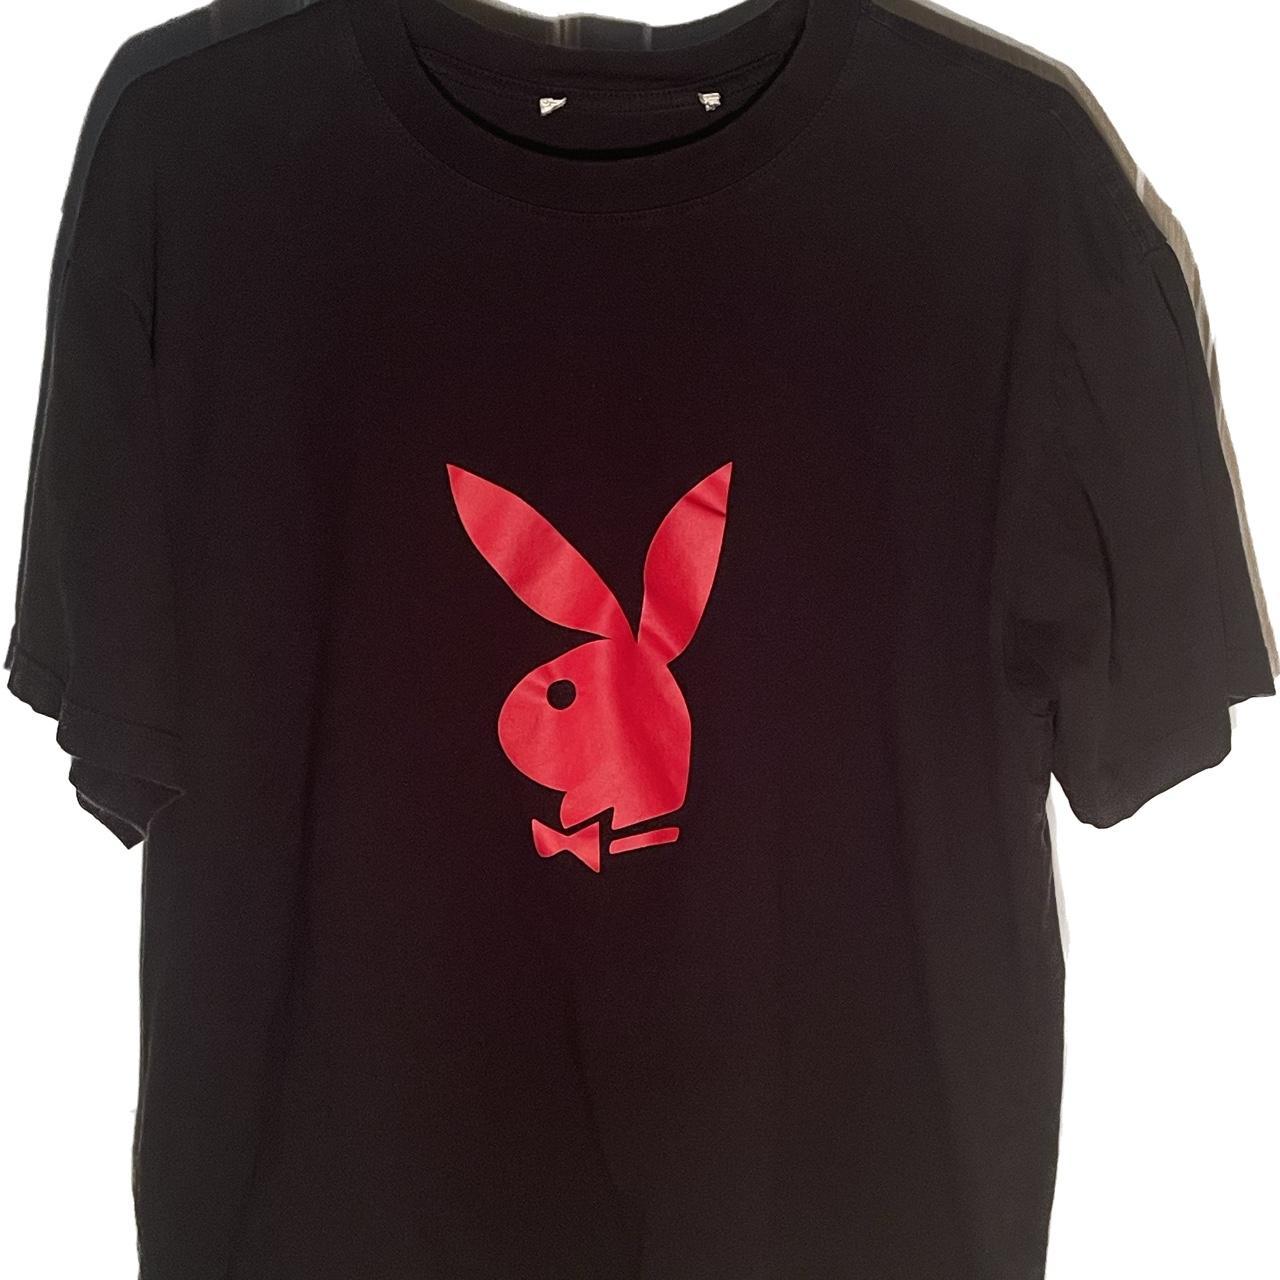 100% cotton Playboy pop-art tshirt. classic playboy - Depop